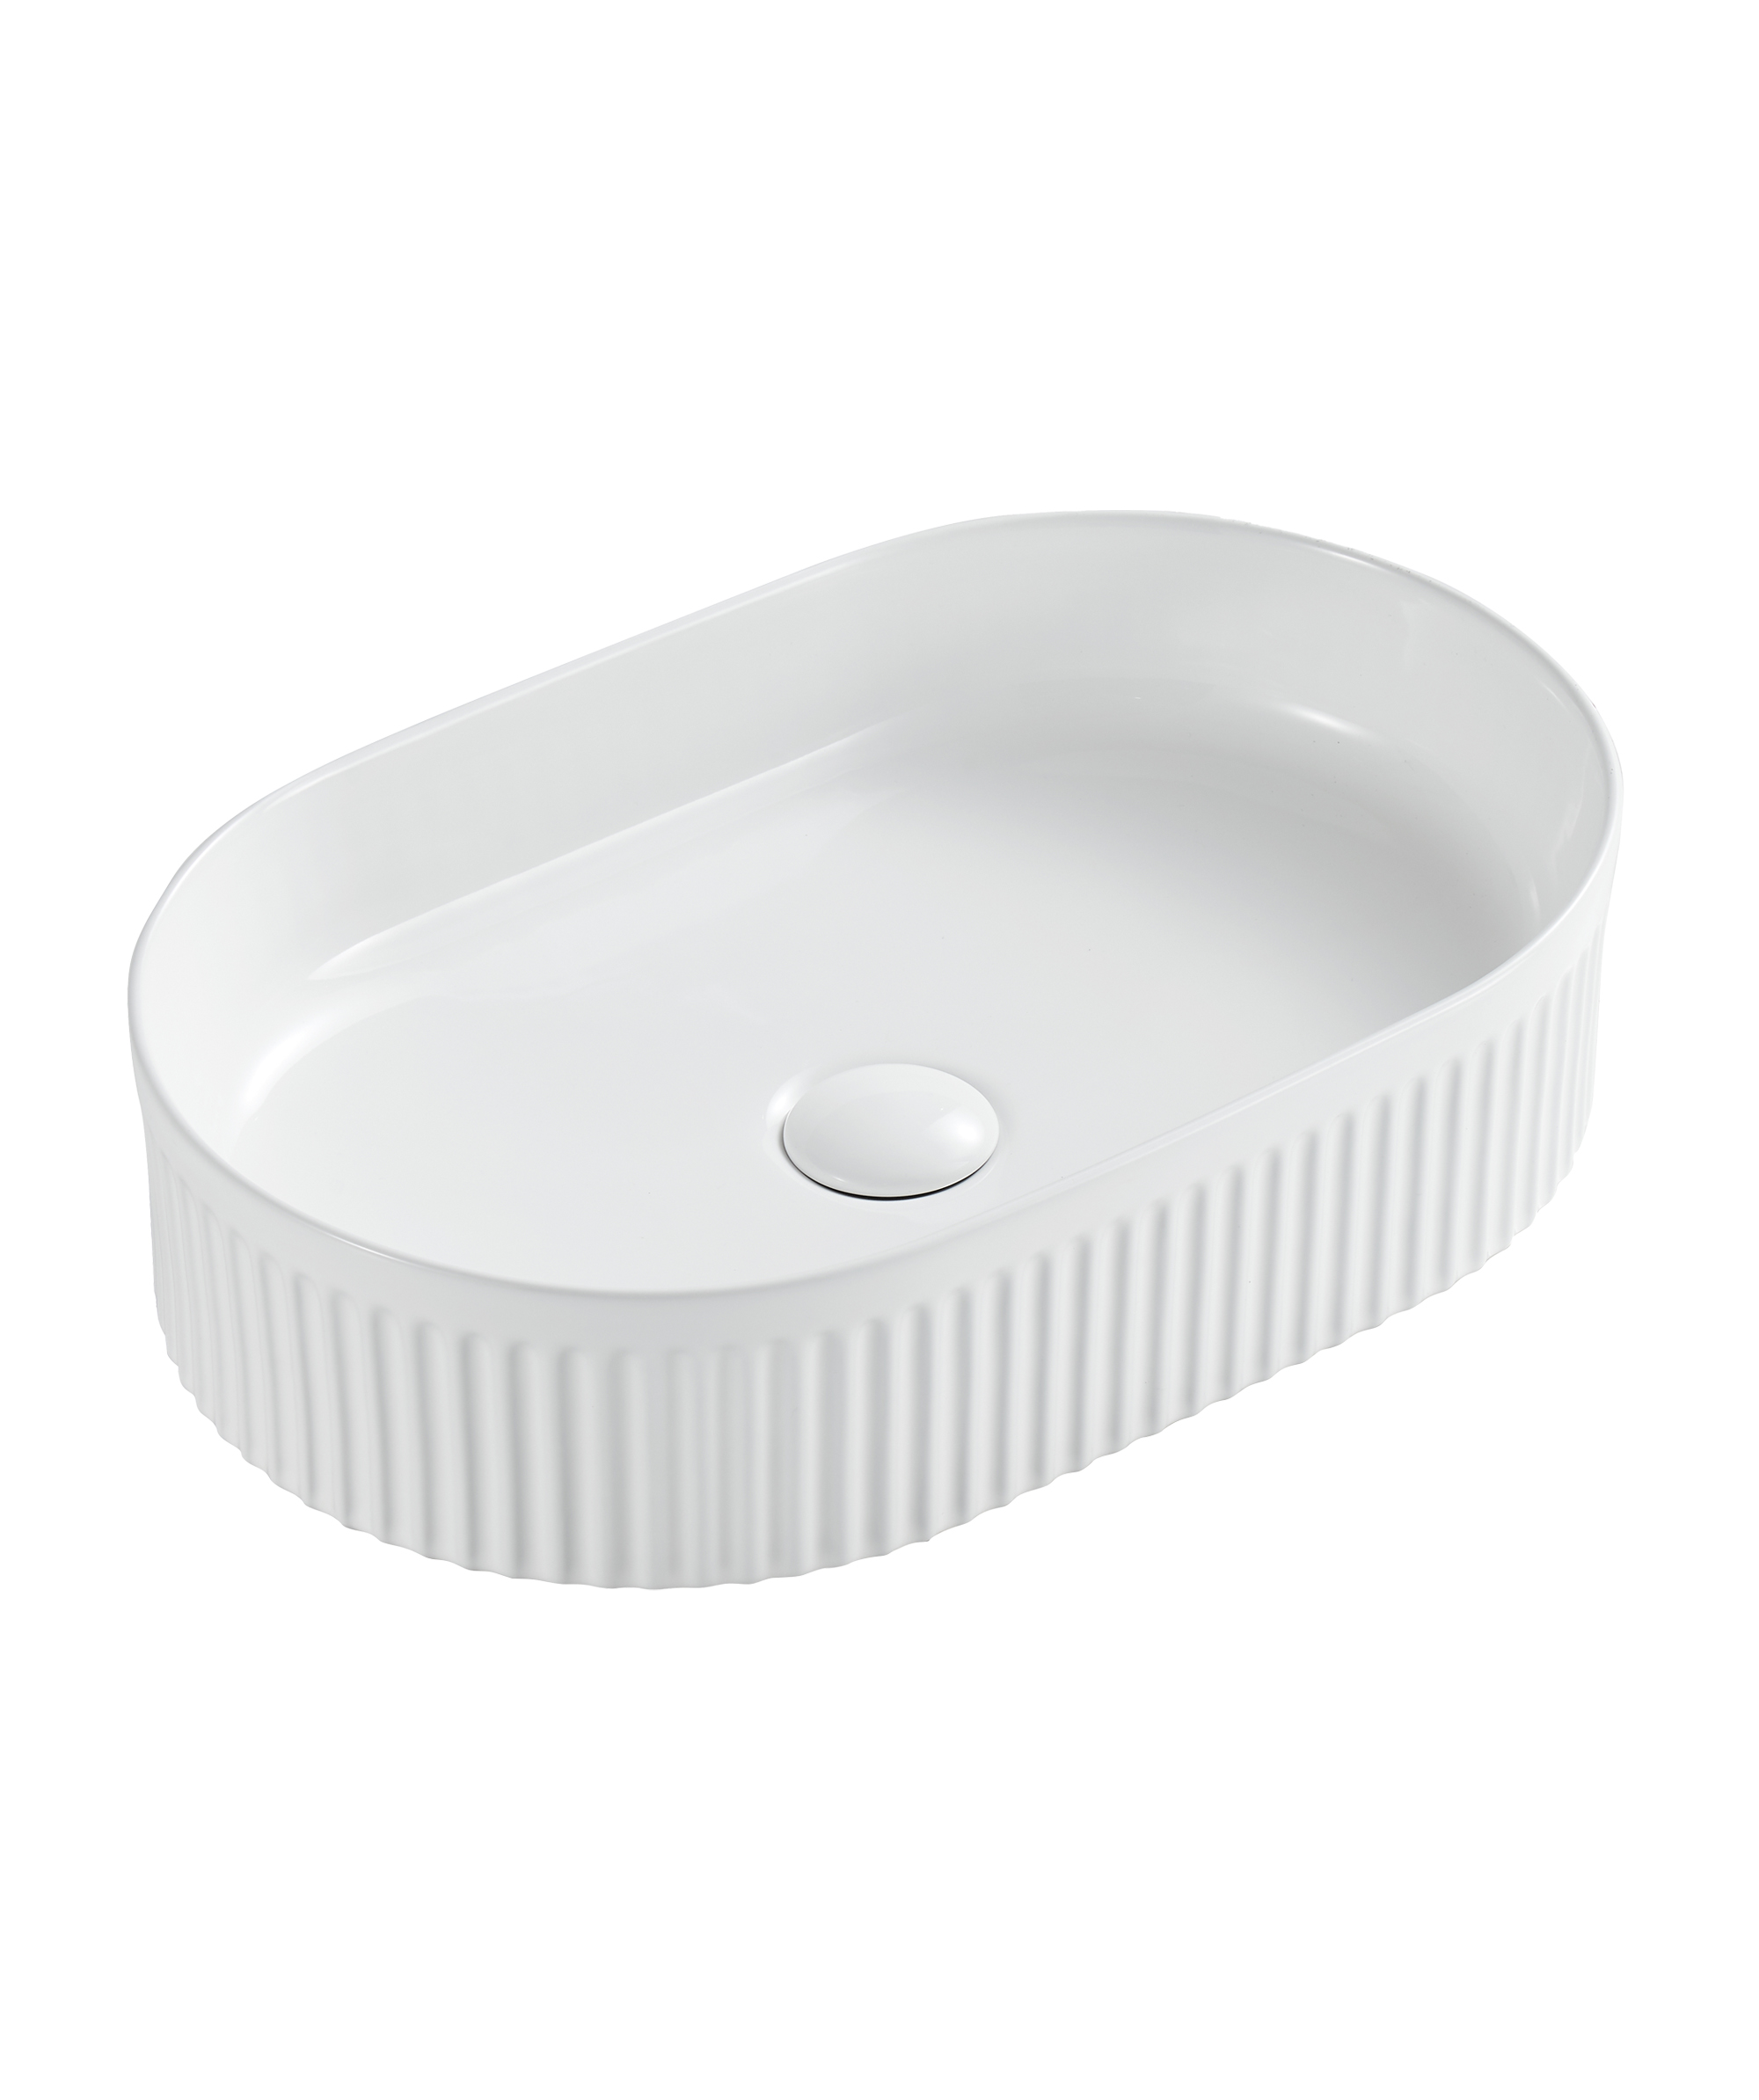 Cleo 500 ceramic basin - White Gloss